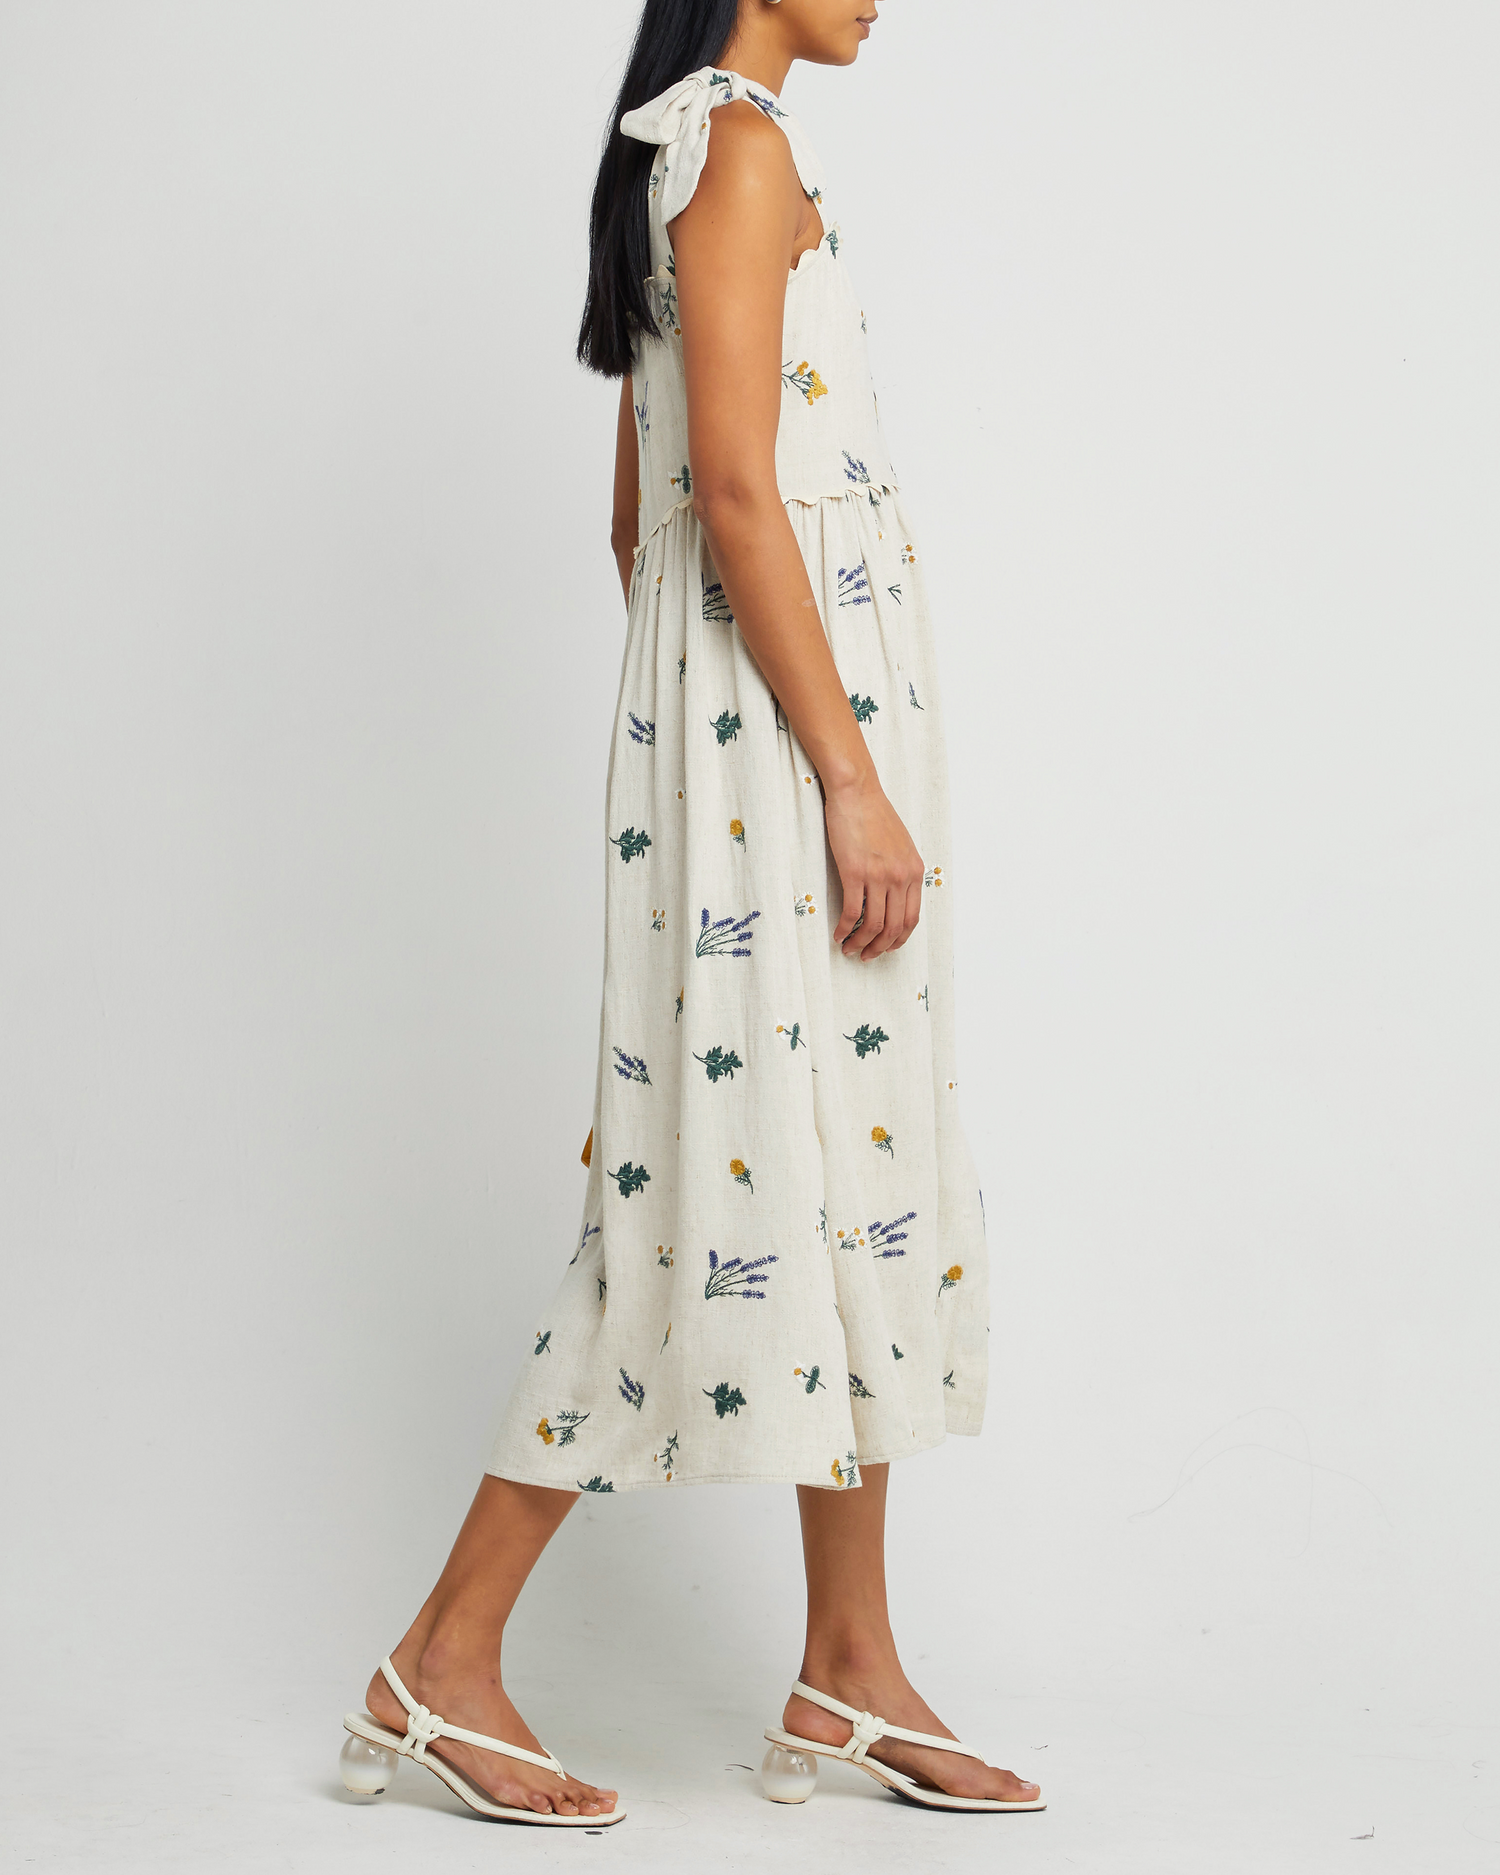 Third image of September Dress, a  maxi dress, linen, embroidered, fall, floral, pockets, buttons, tank